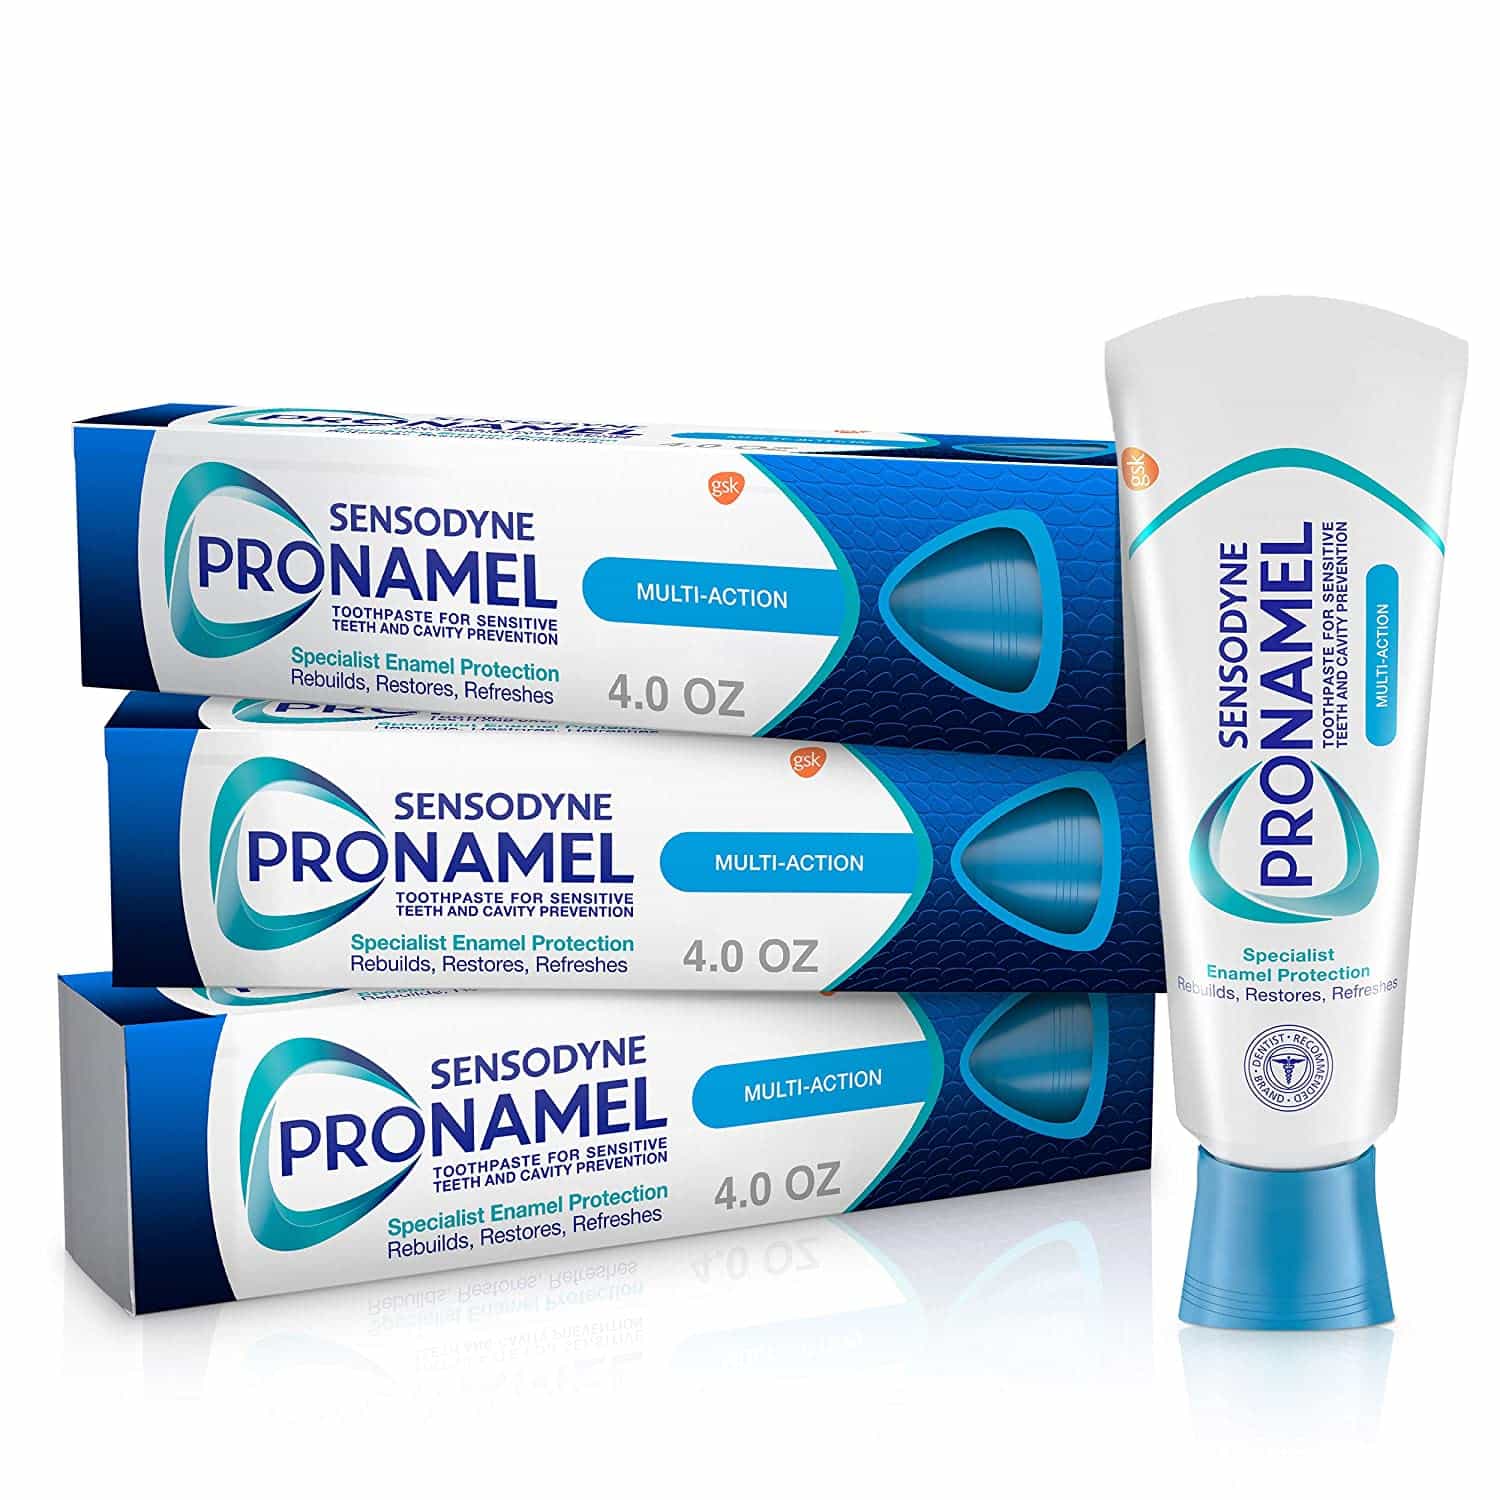 Several tubes of Sensodyne S L S free toothpaste